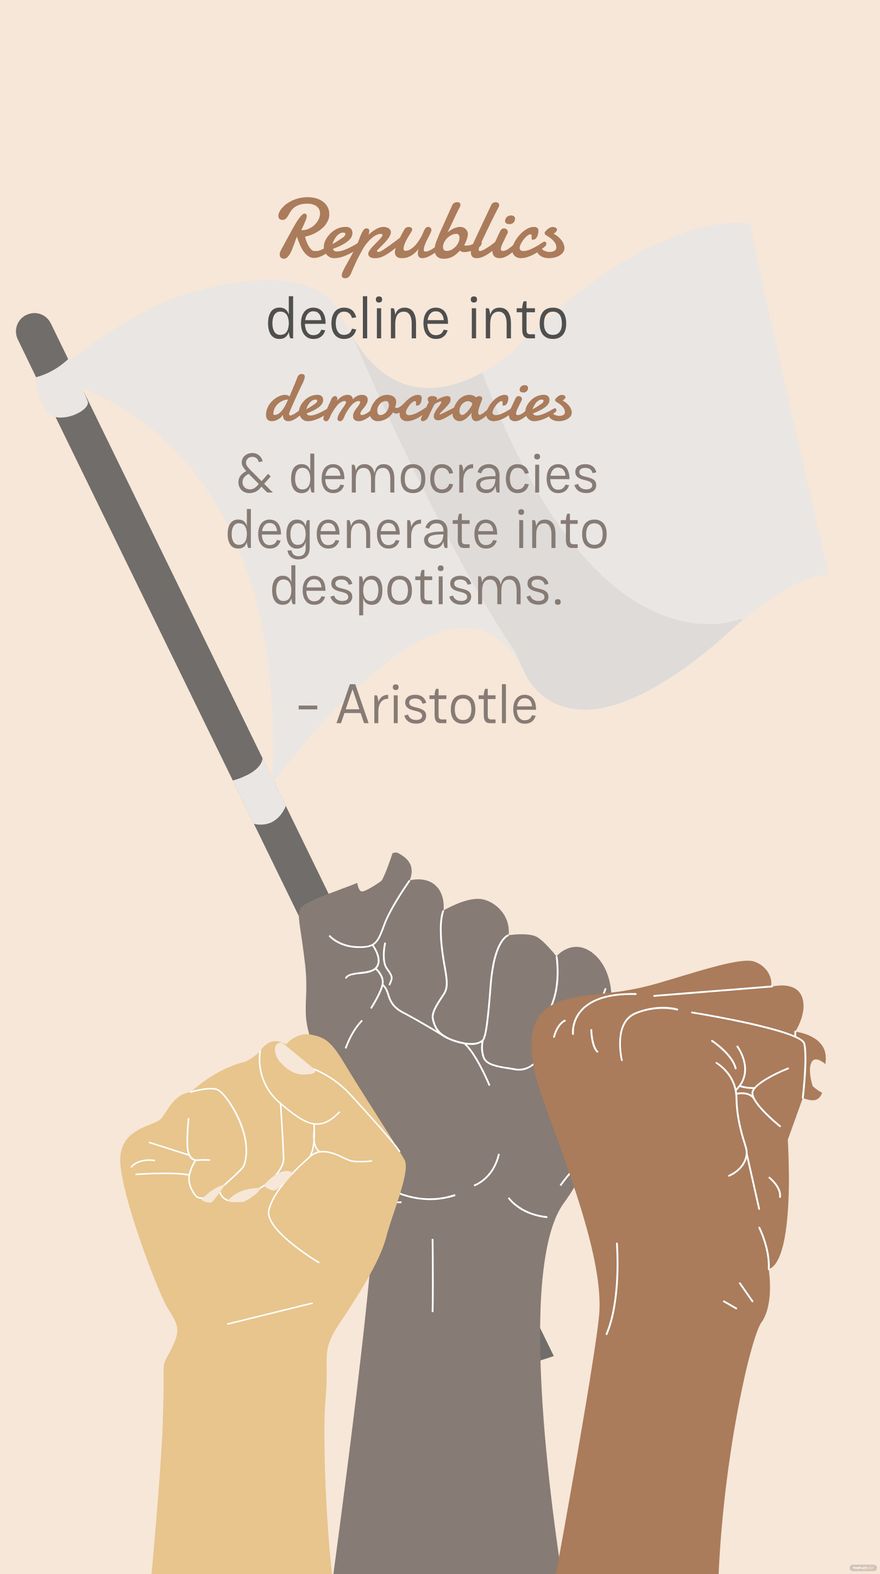 Republics decline into democracies and democracies degenerate into despotisms. - Aristotle